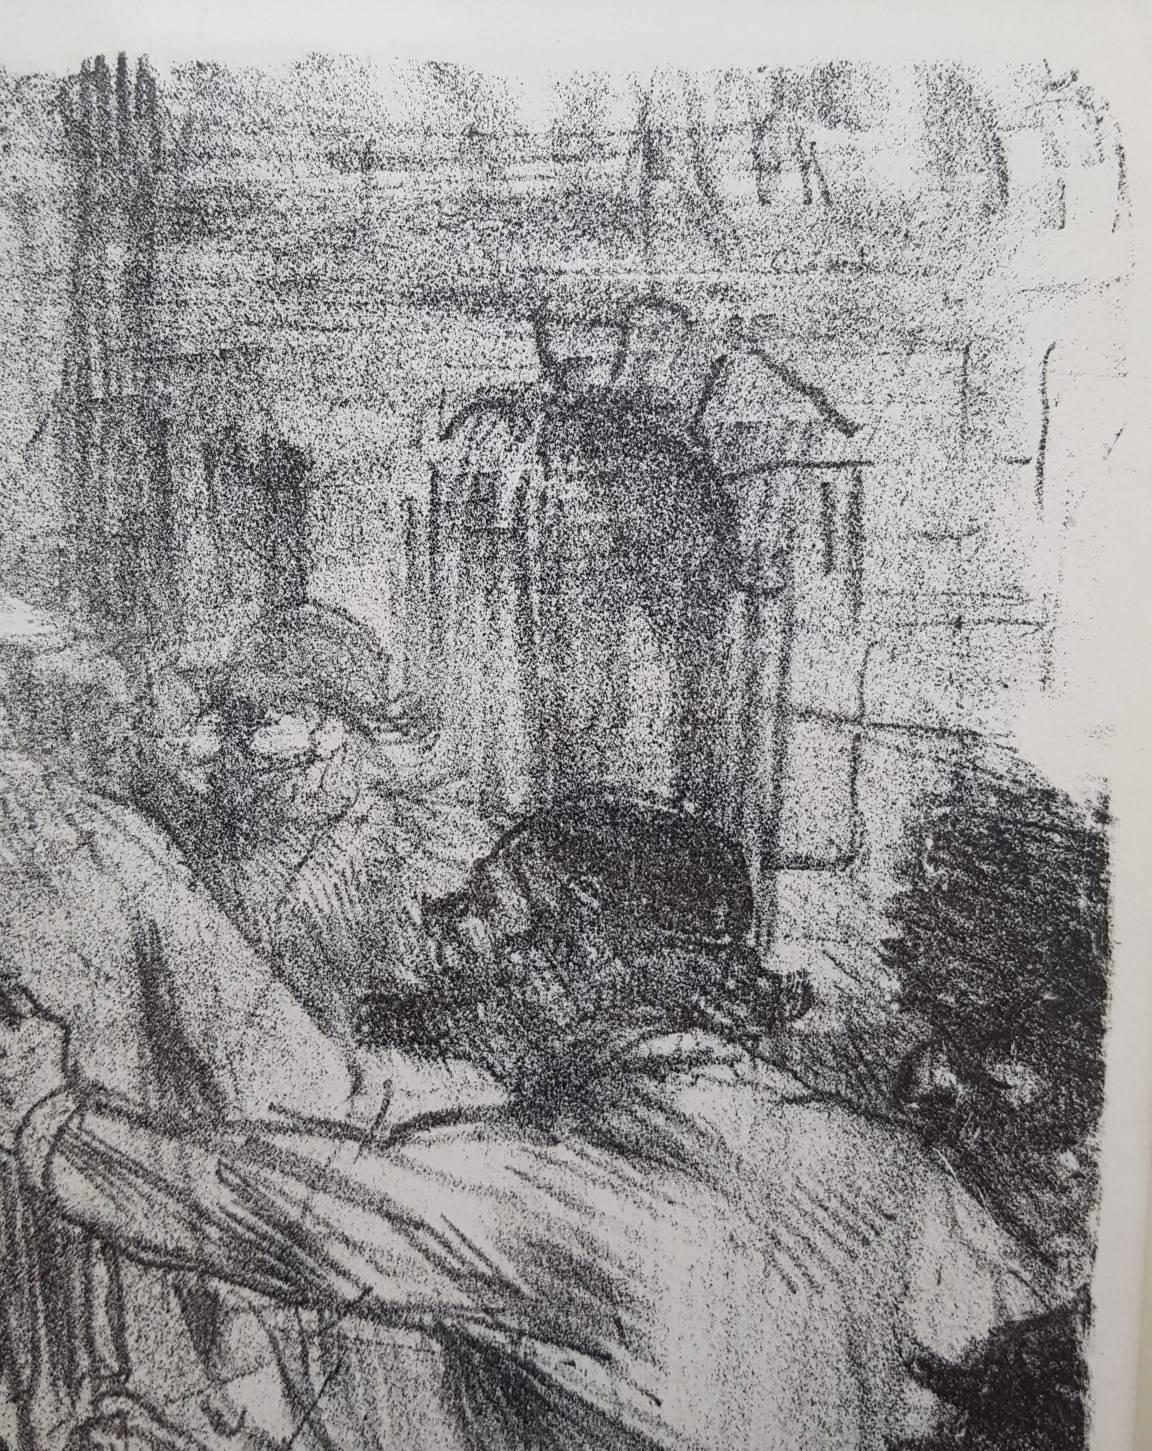 An original lithograph by French artist Henri de Toulouse-Lautrec (1864-1901) titled "La Halle aux Draps. Cracovie", 1898. Signed in the plate upper left. Limited edition: 355. Place made: Paris, lle-de-France, France. Published by Henri